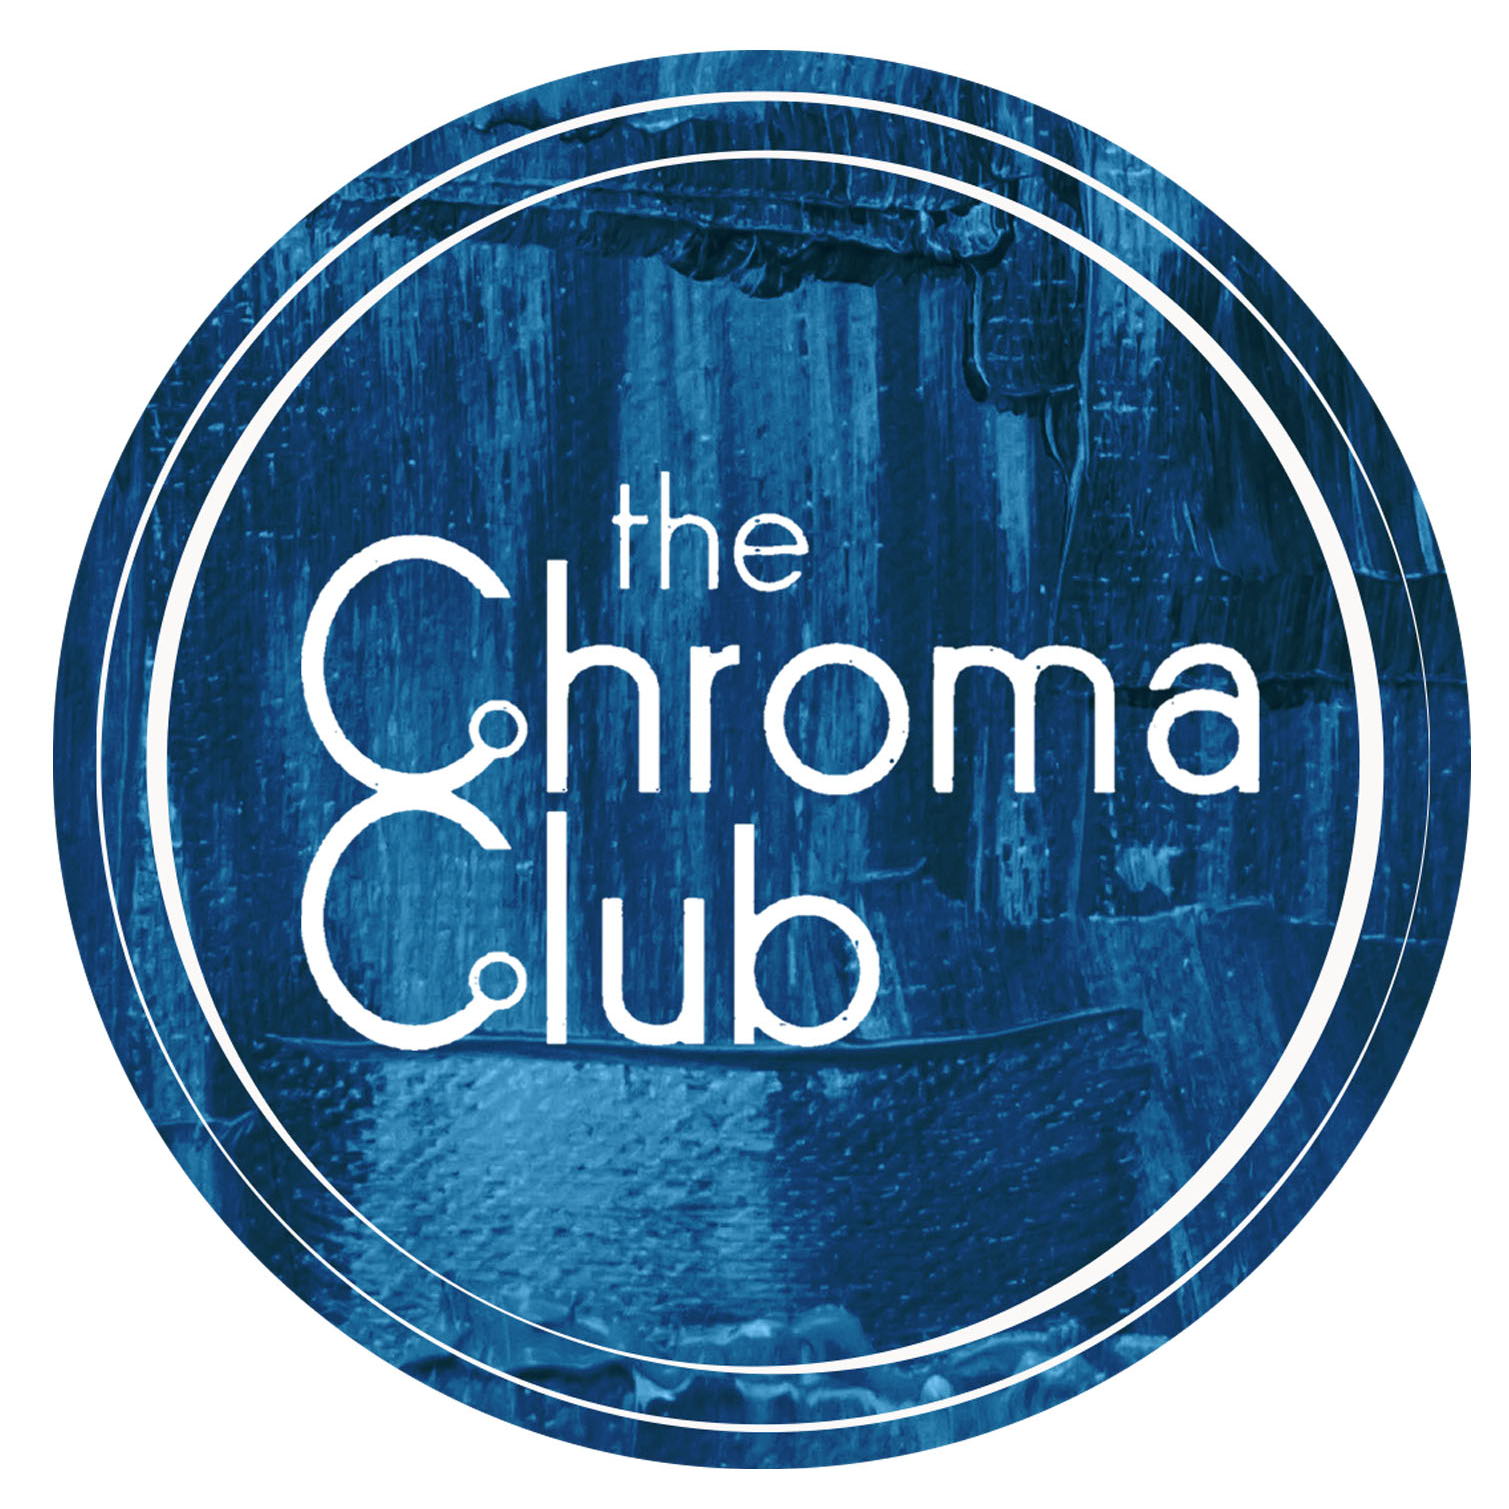 The Chroma Club